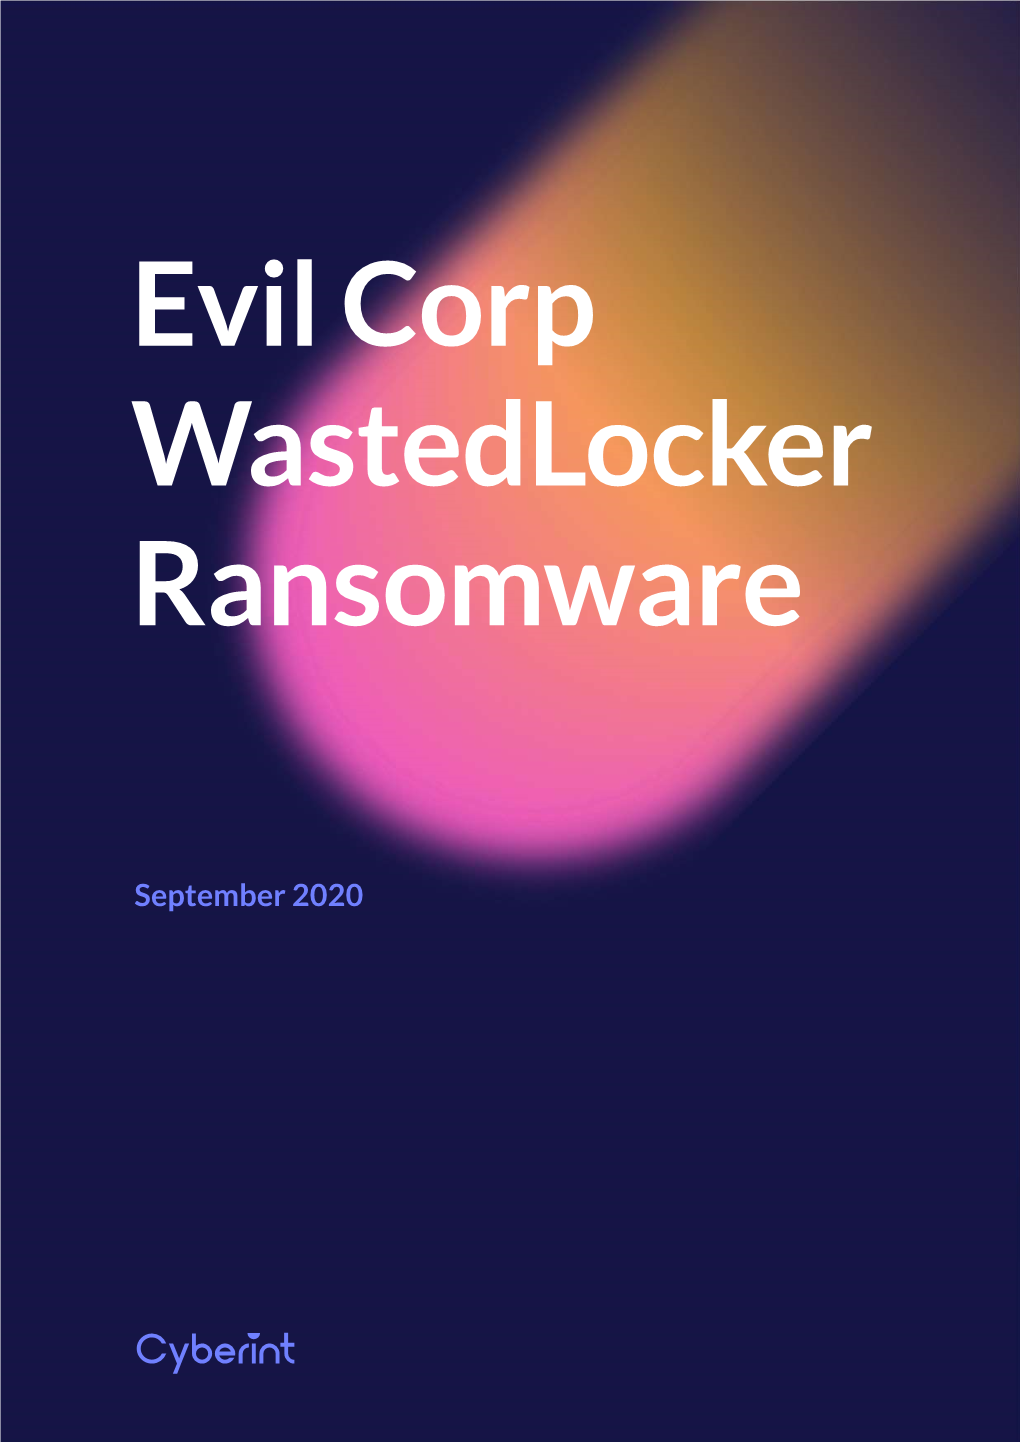 Evil Corp Wastedlocker Ransomware